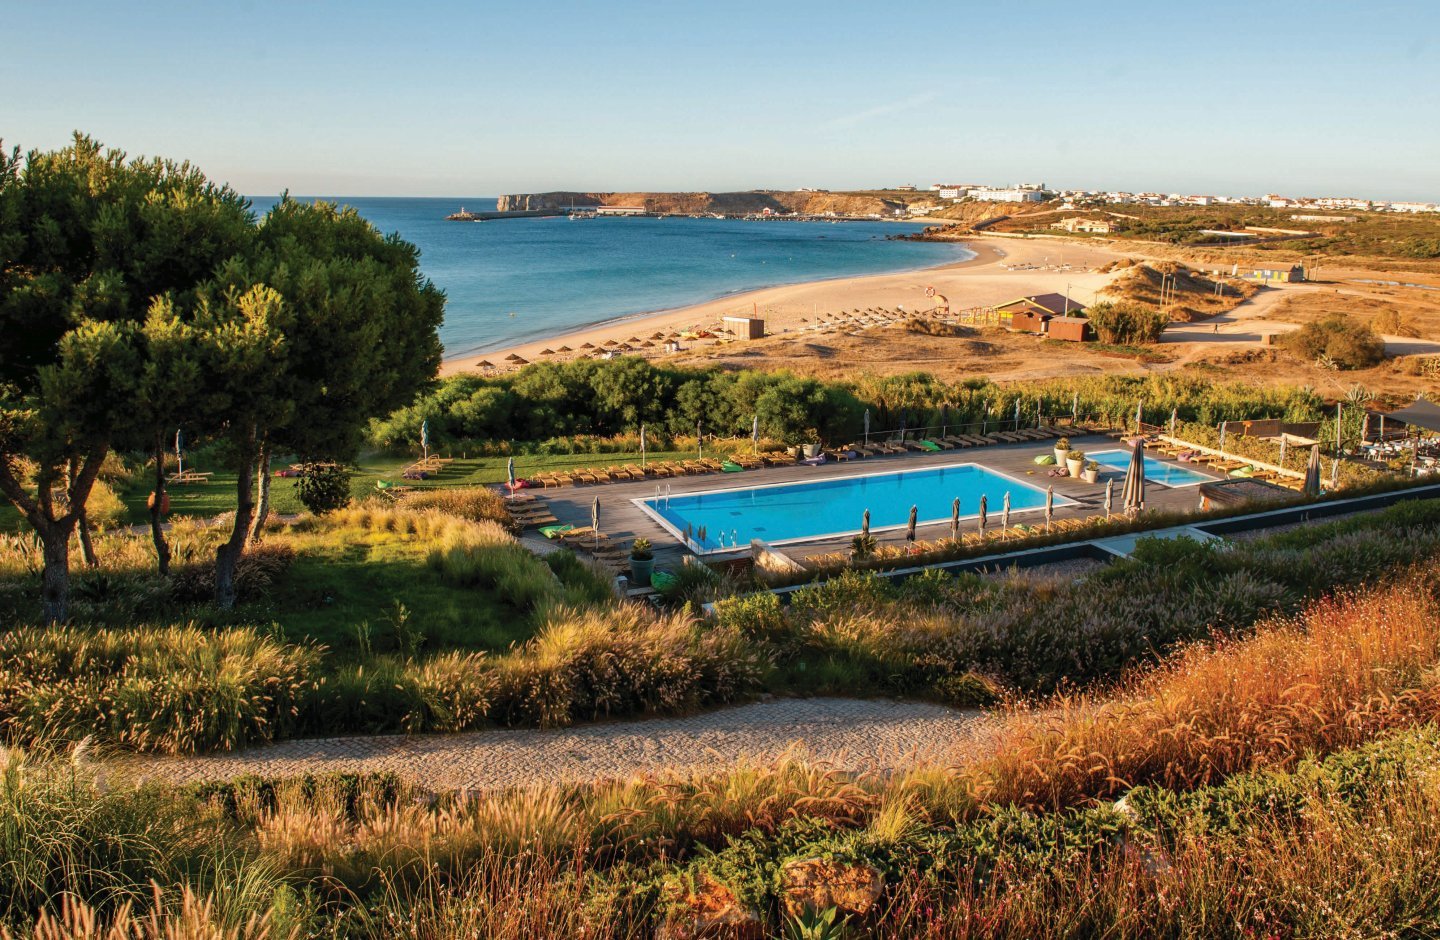 Martinhal Sagres Beach Resort & Hotel located in west Algarve Portugal